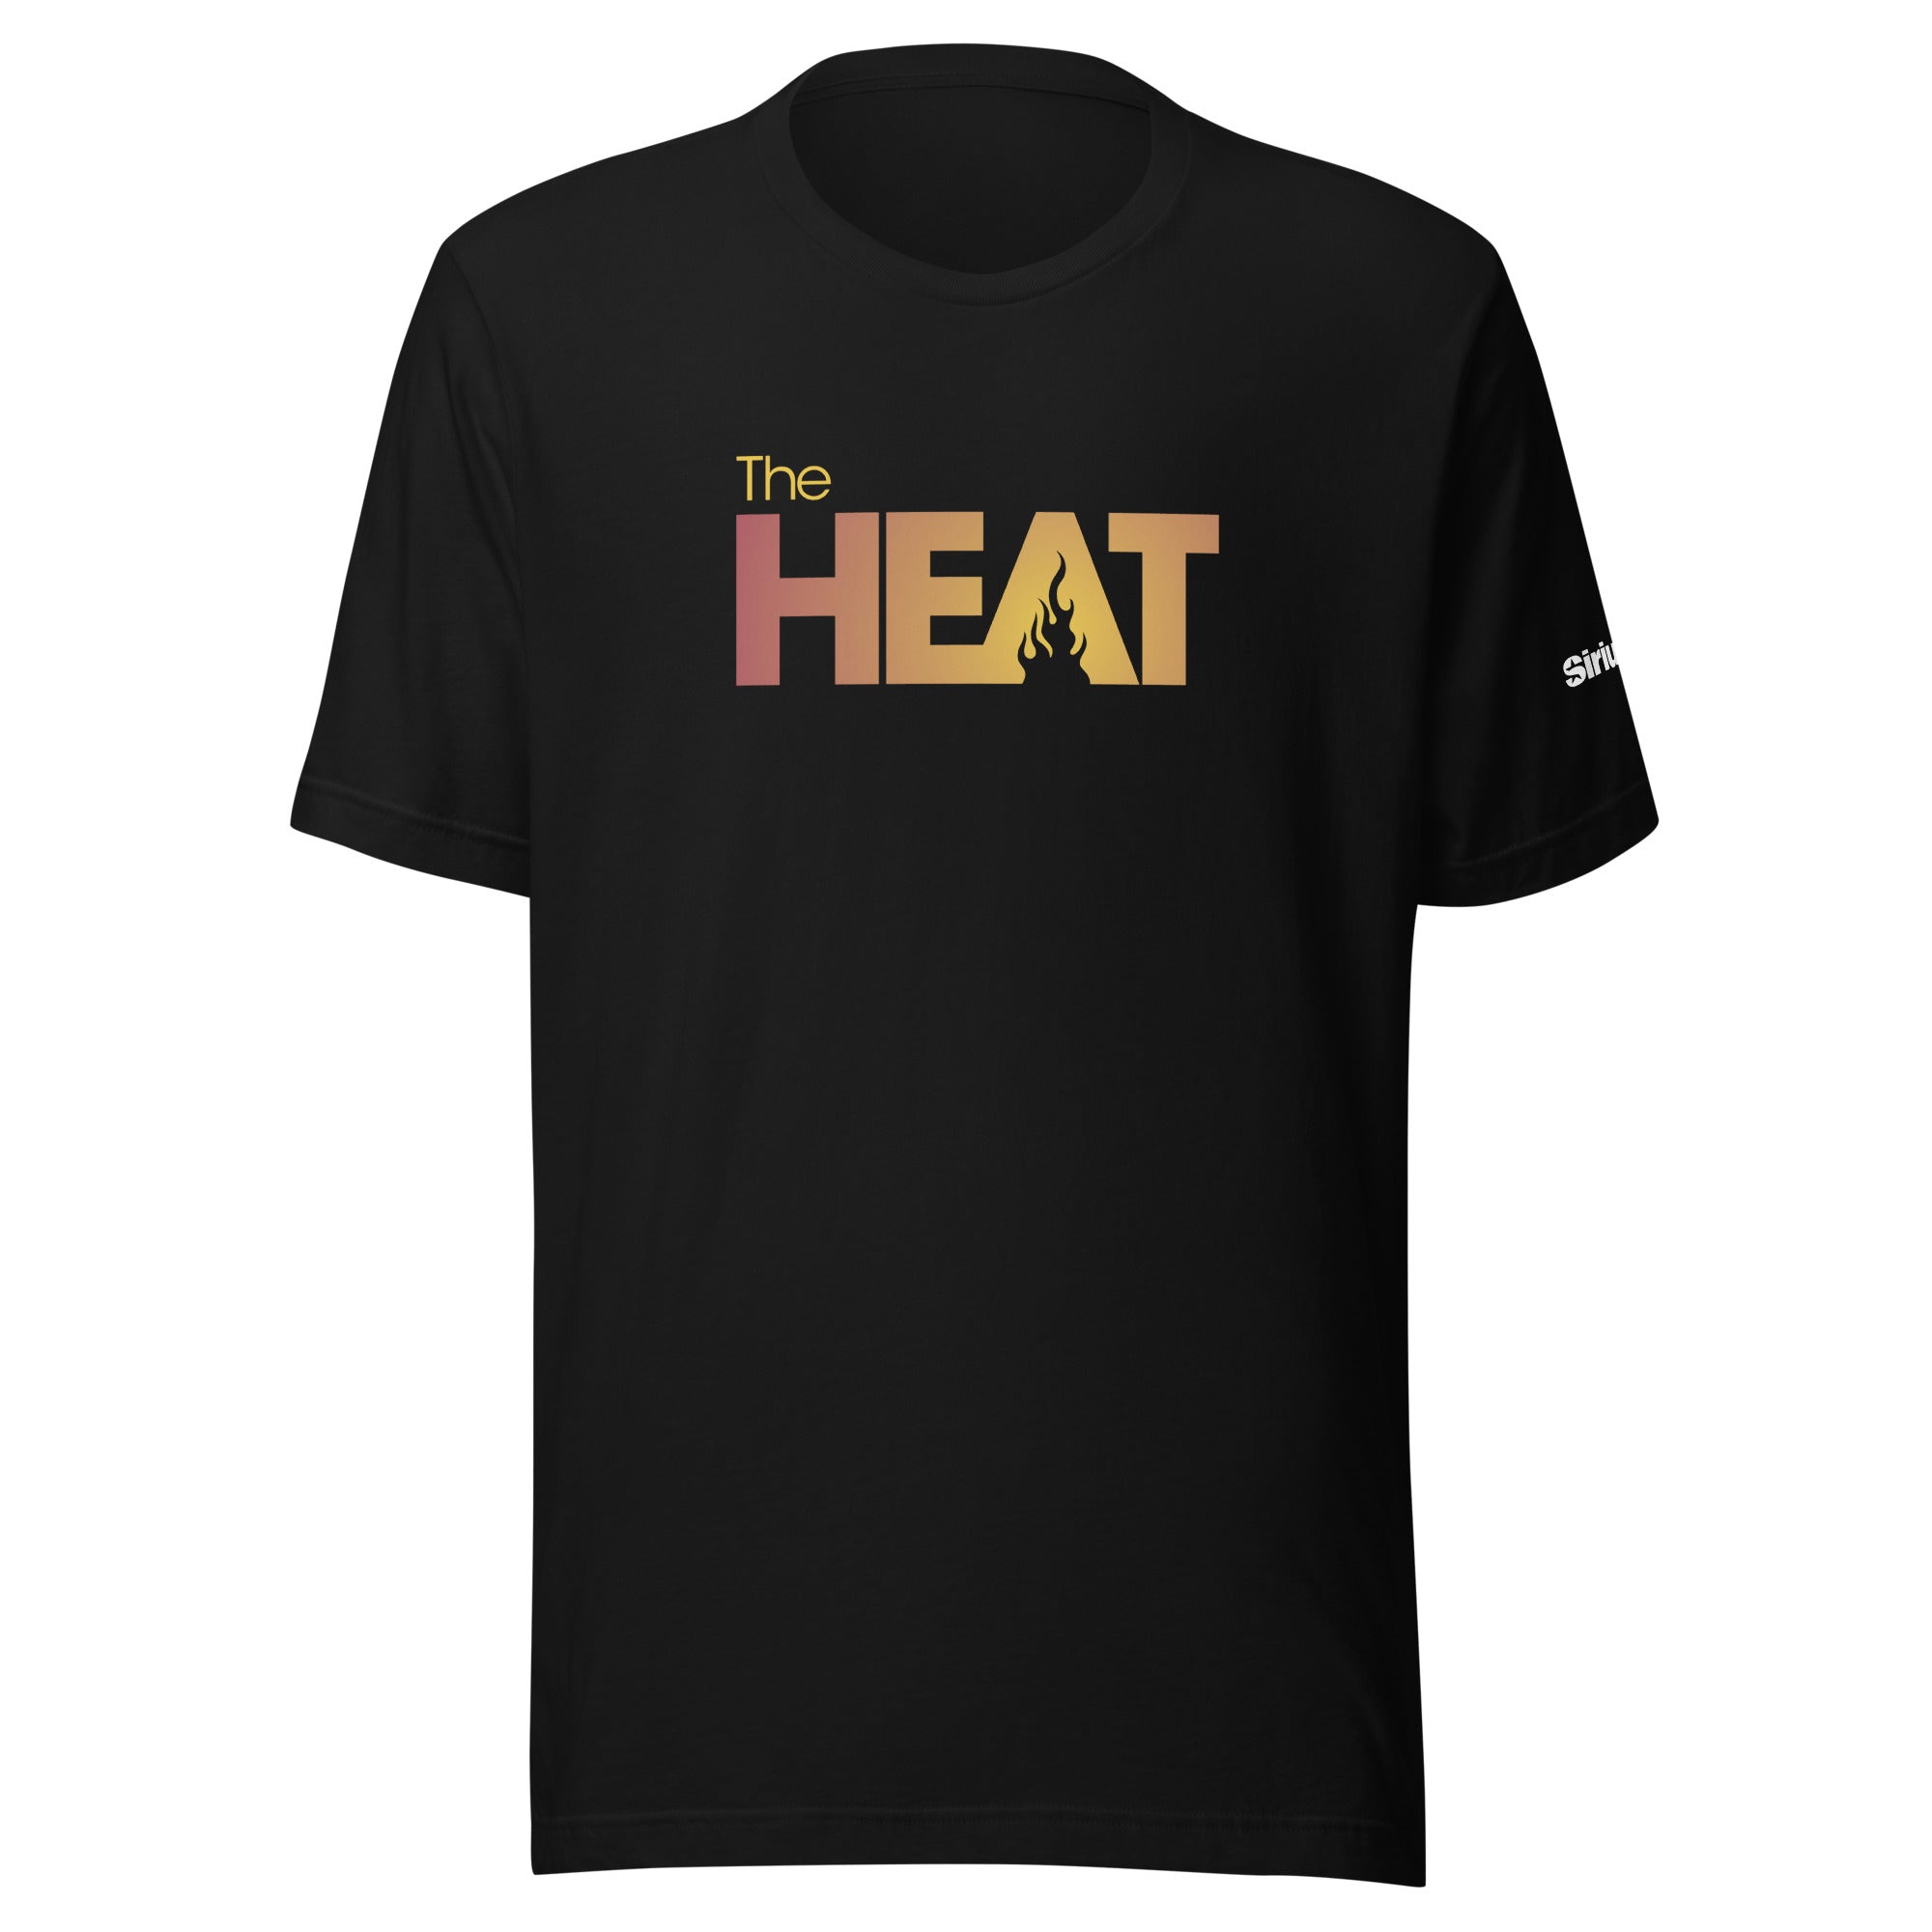 The Heat: T-shirt (Black)